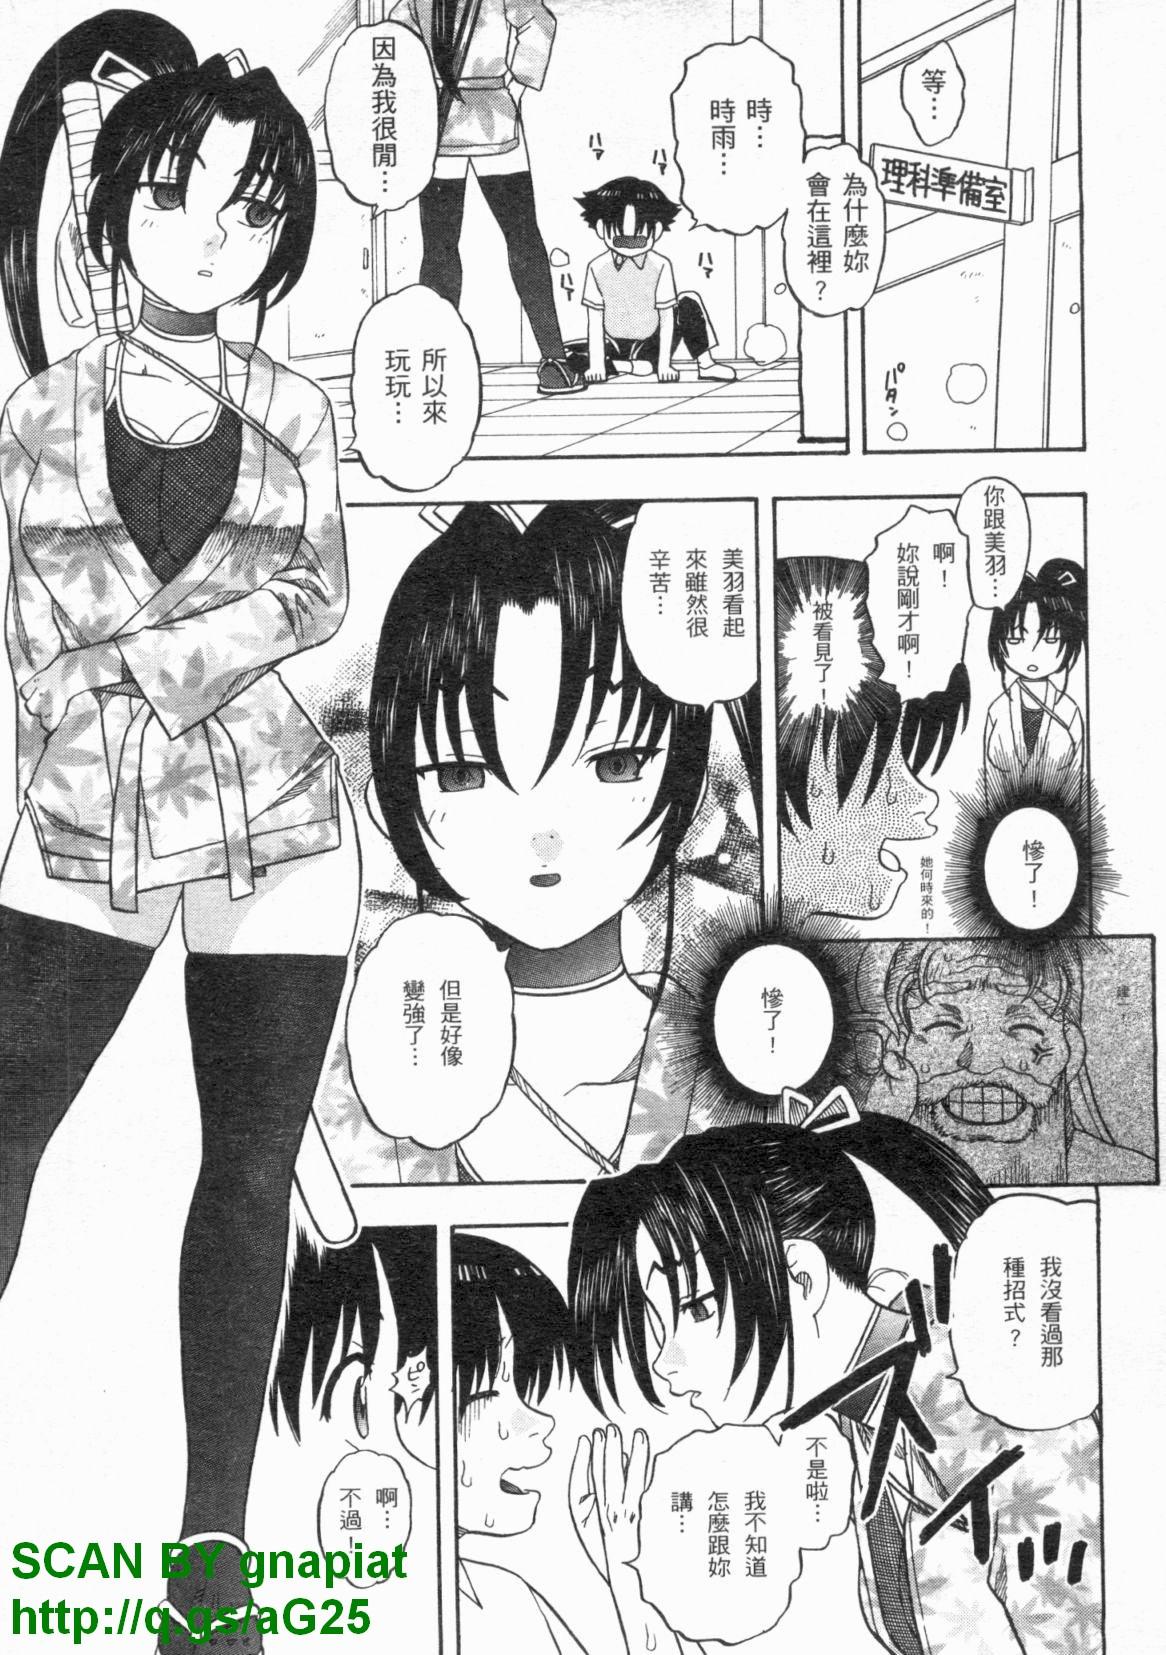 Shigure and Miyu in School Life 17